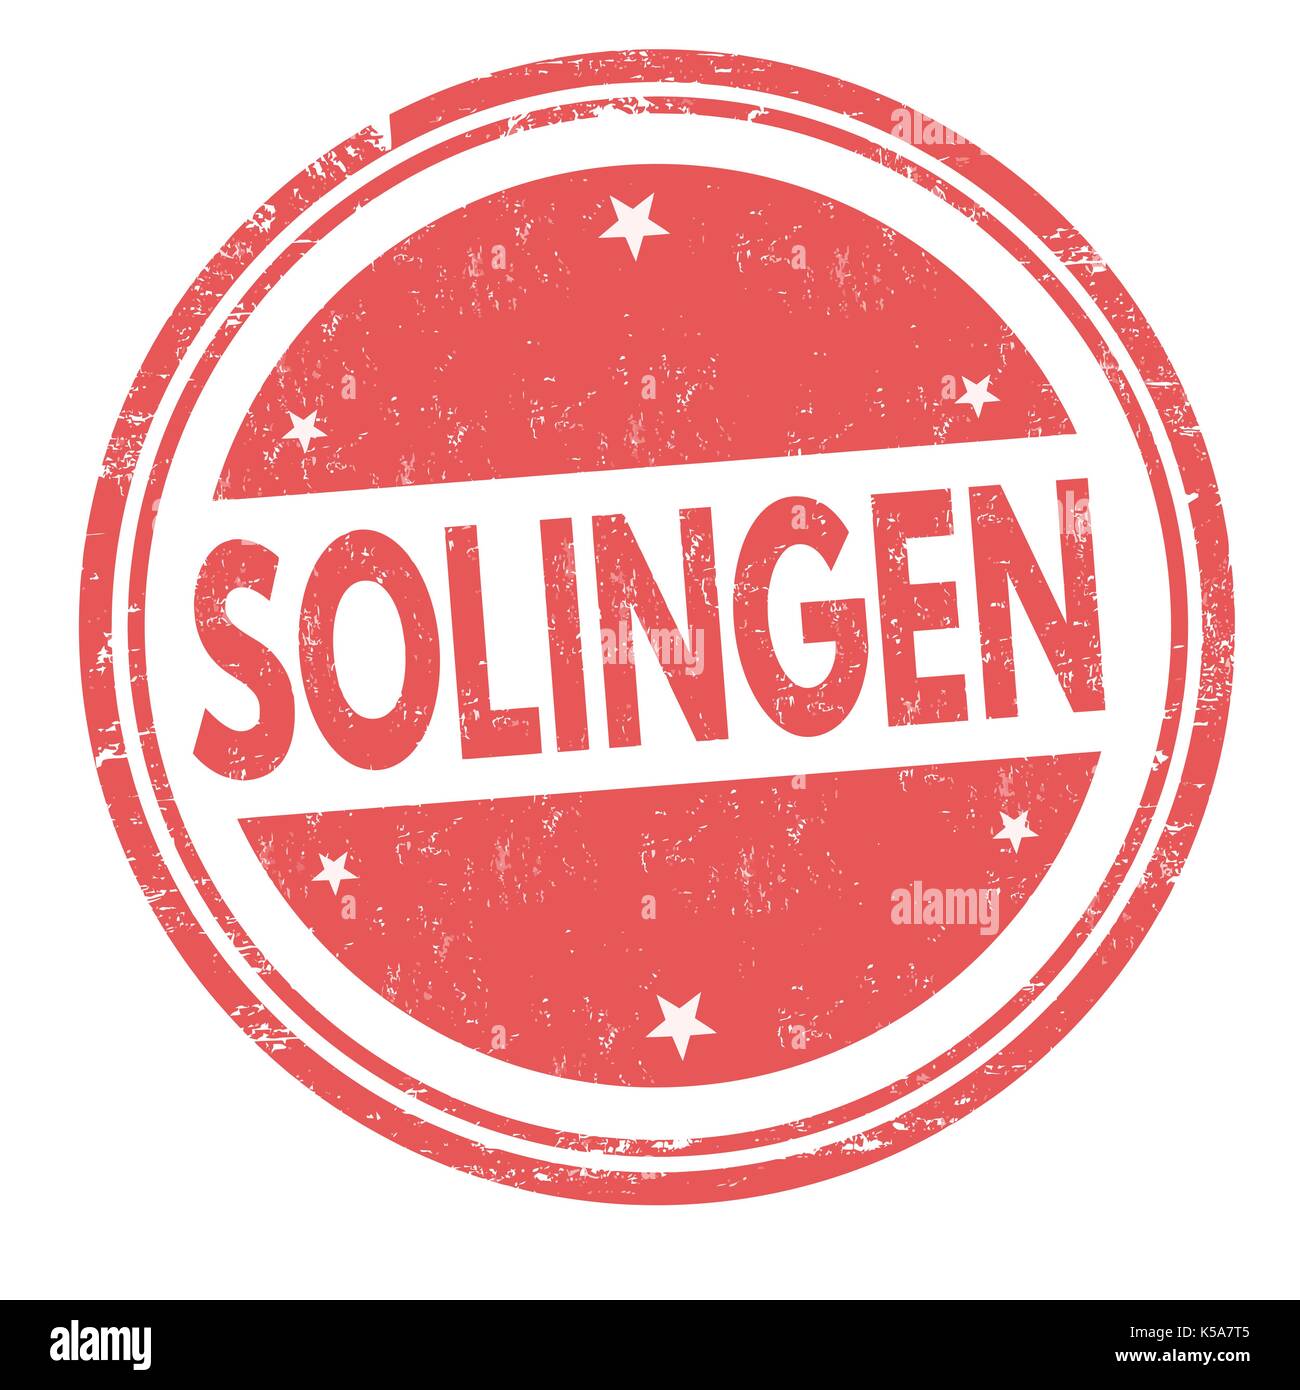 Solingen sign or stamp on white background, vector illustration Stock Vector